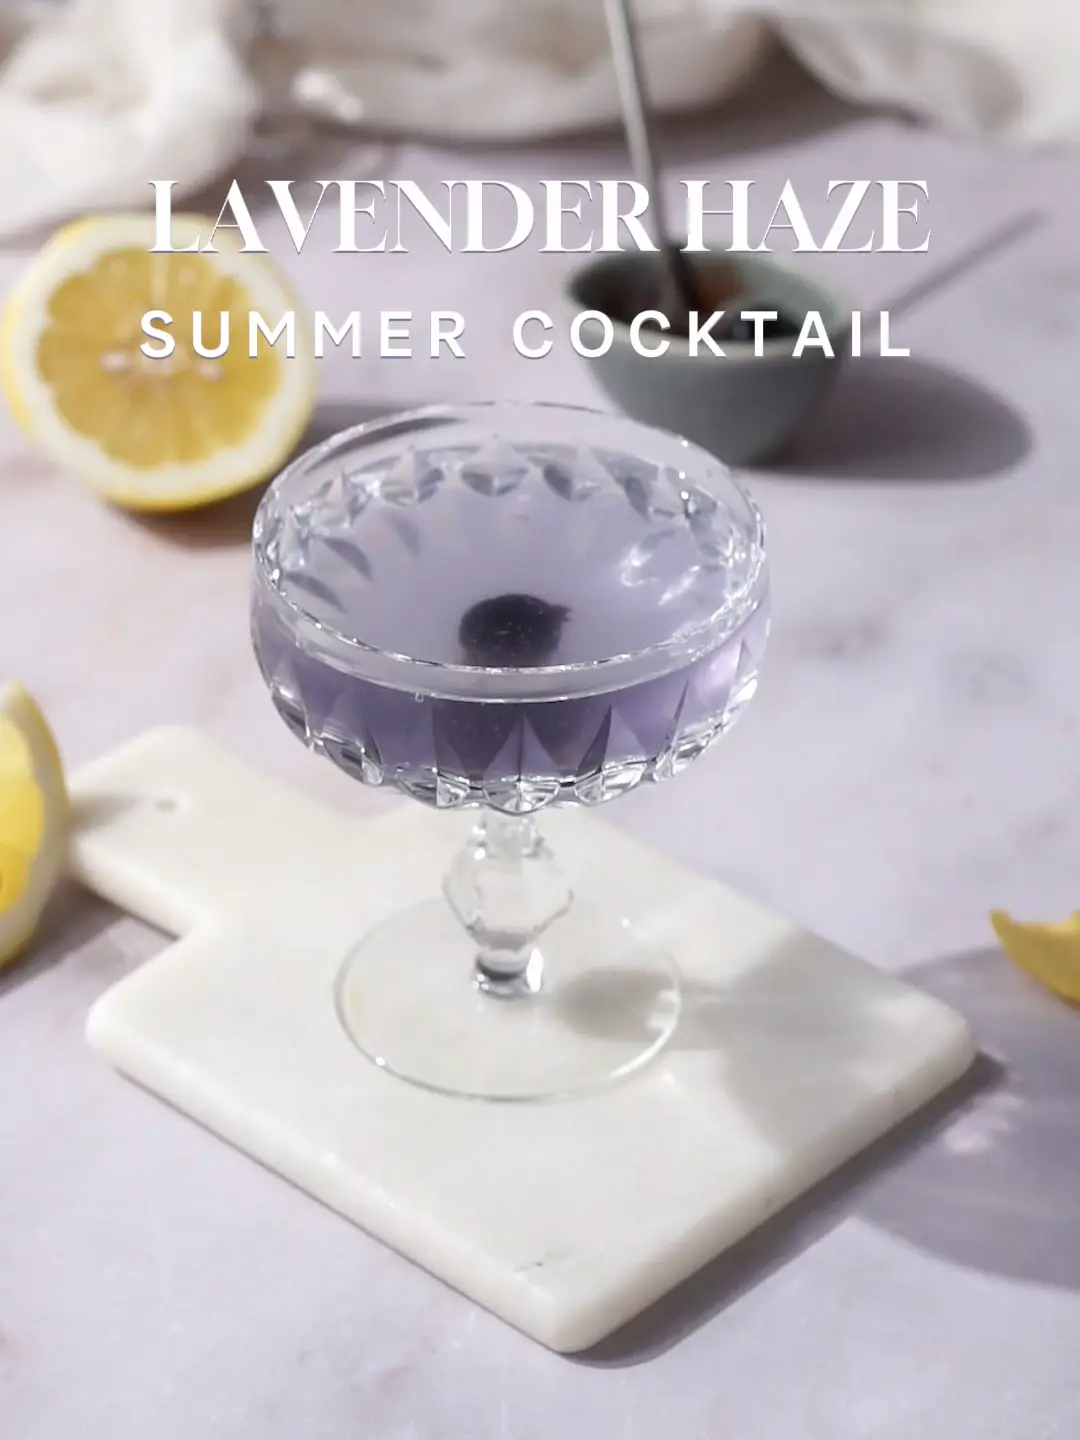 Lavender Haze Cocktail Recipe  How to Make the perfect Lavender Haze